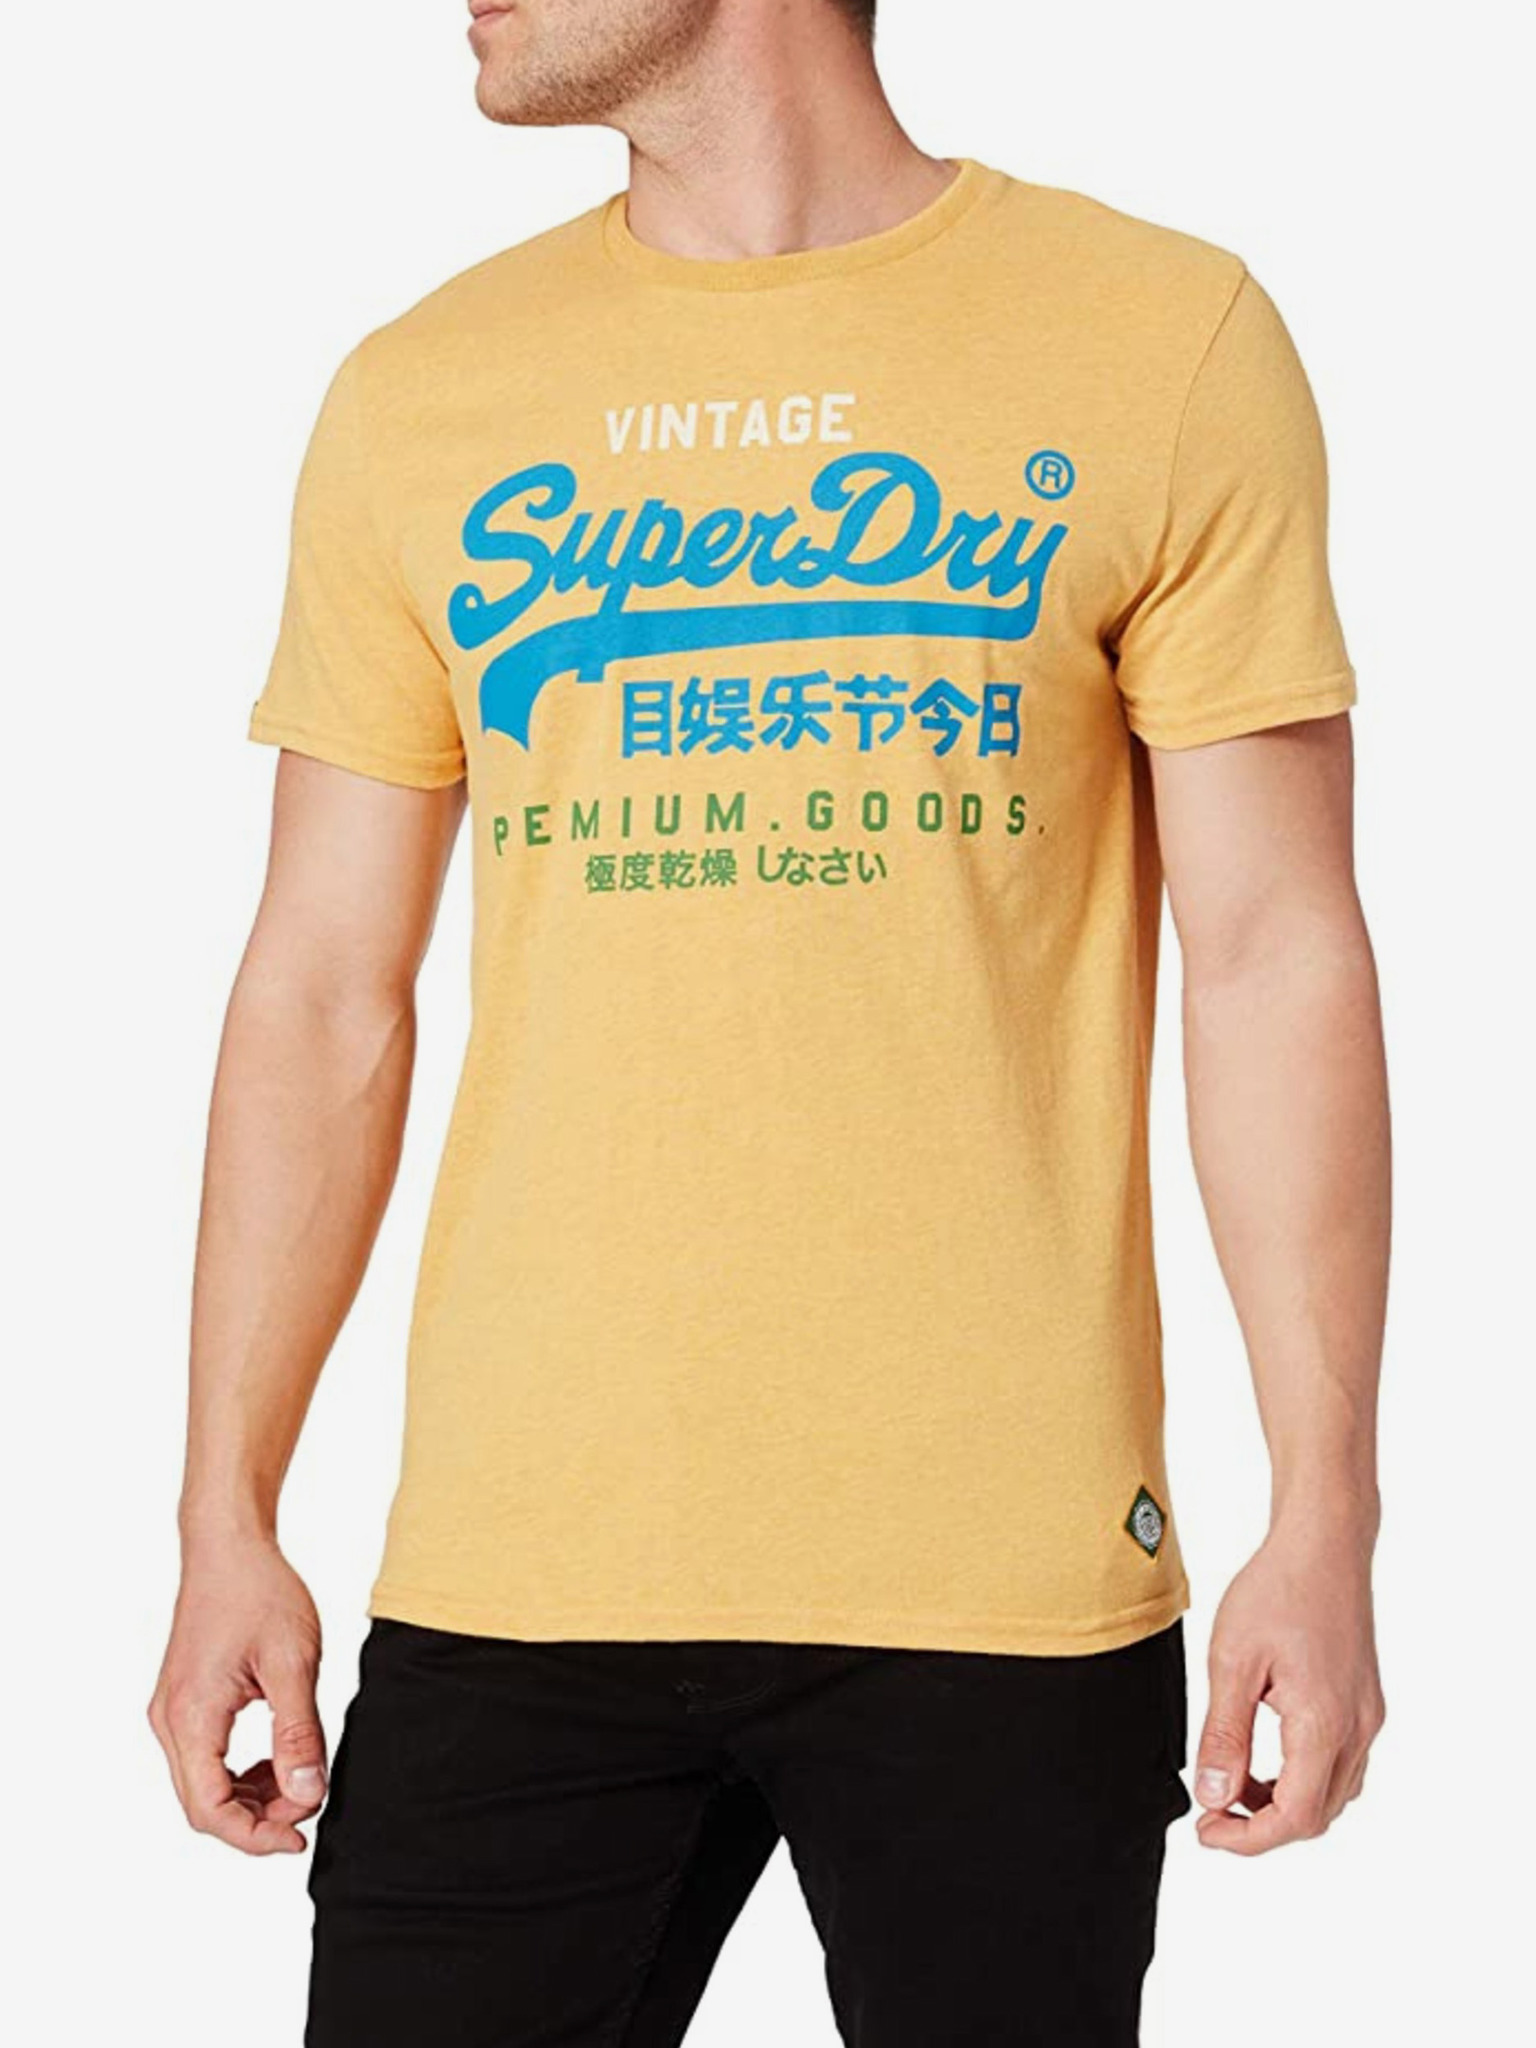 Superdry Osaka Series 6 Japan Short Sleeve Crew Neck T-Shirt Blue  Men's Size XL